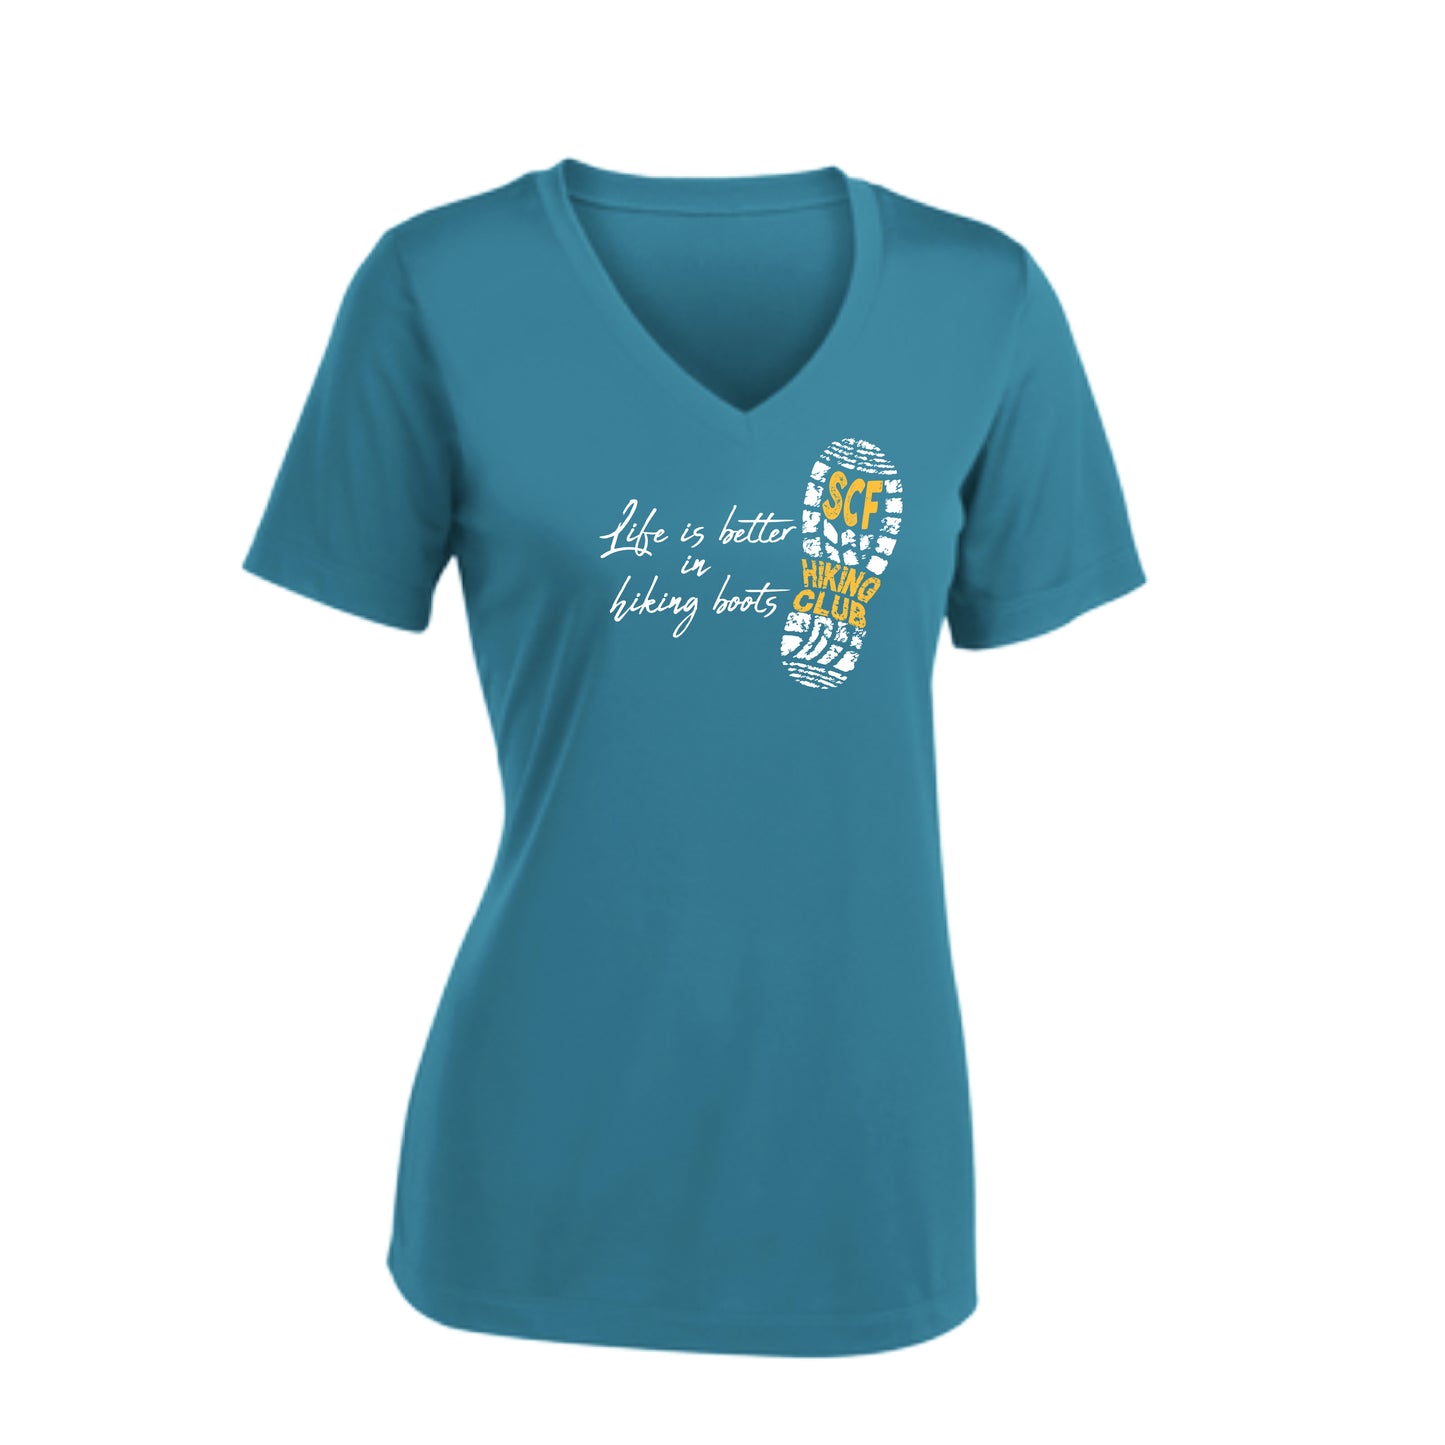 Sun City Festival Hiking Club | Women’s Short Sleeve V-Neck Shirt | 100% Polyester